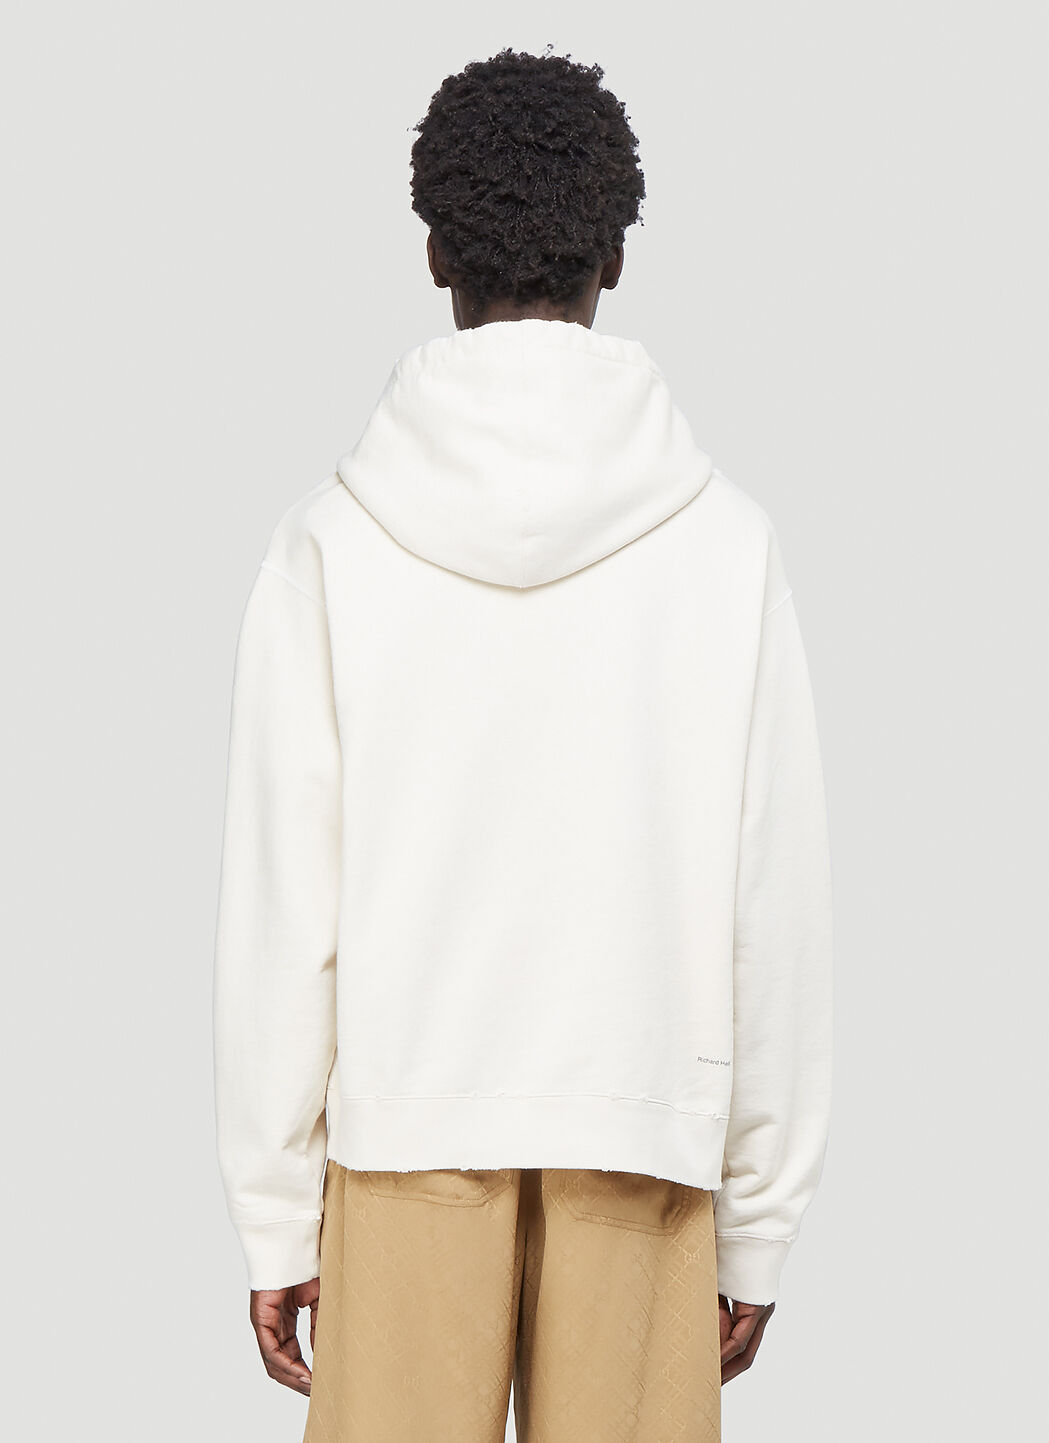 Gucci Think Thank Hooded Sweatshirt in White | LN-CC